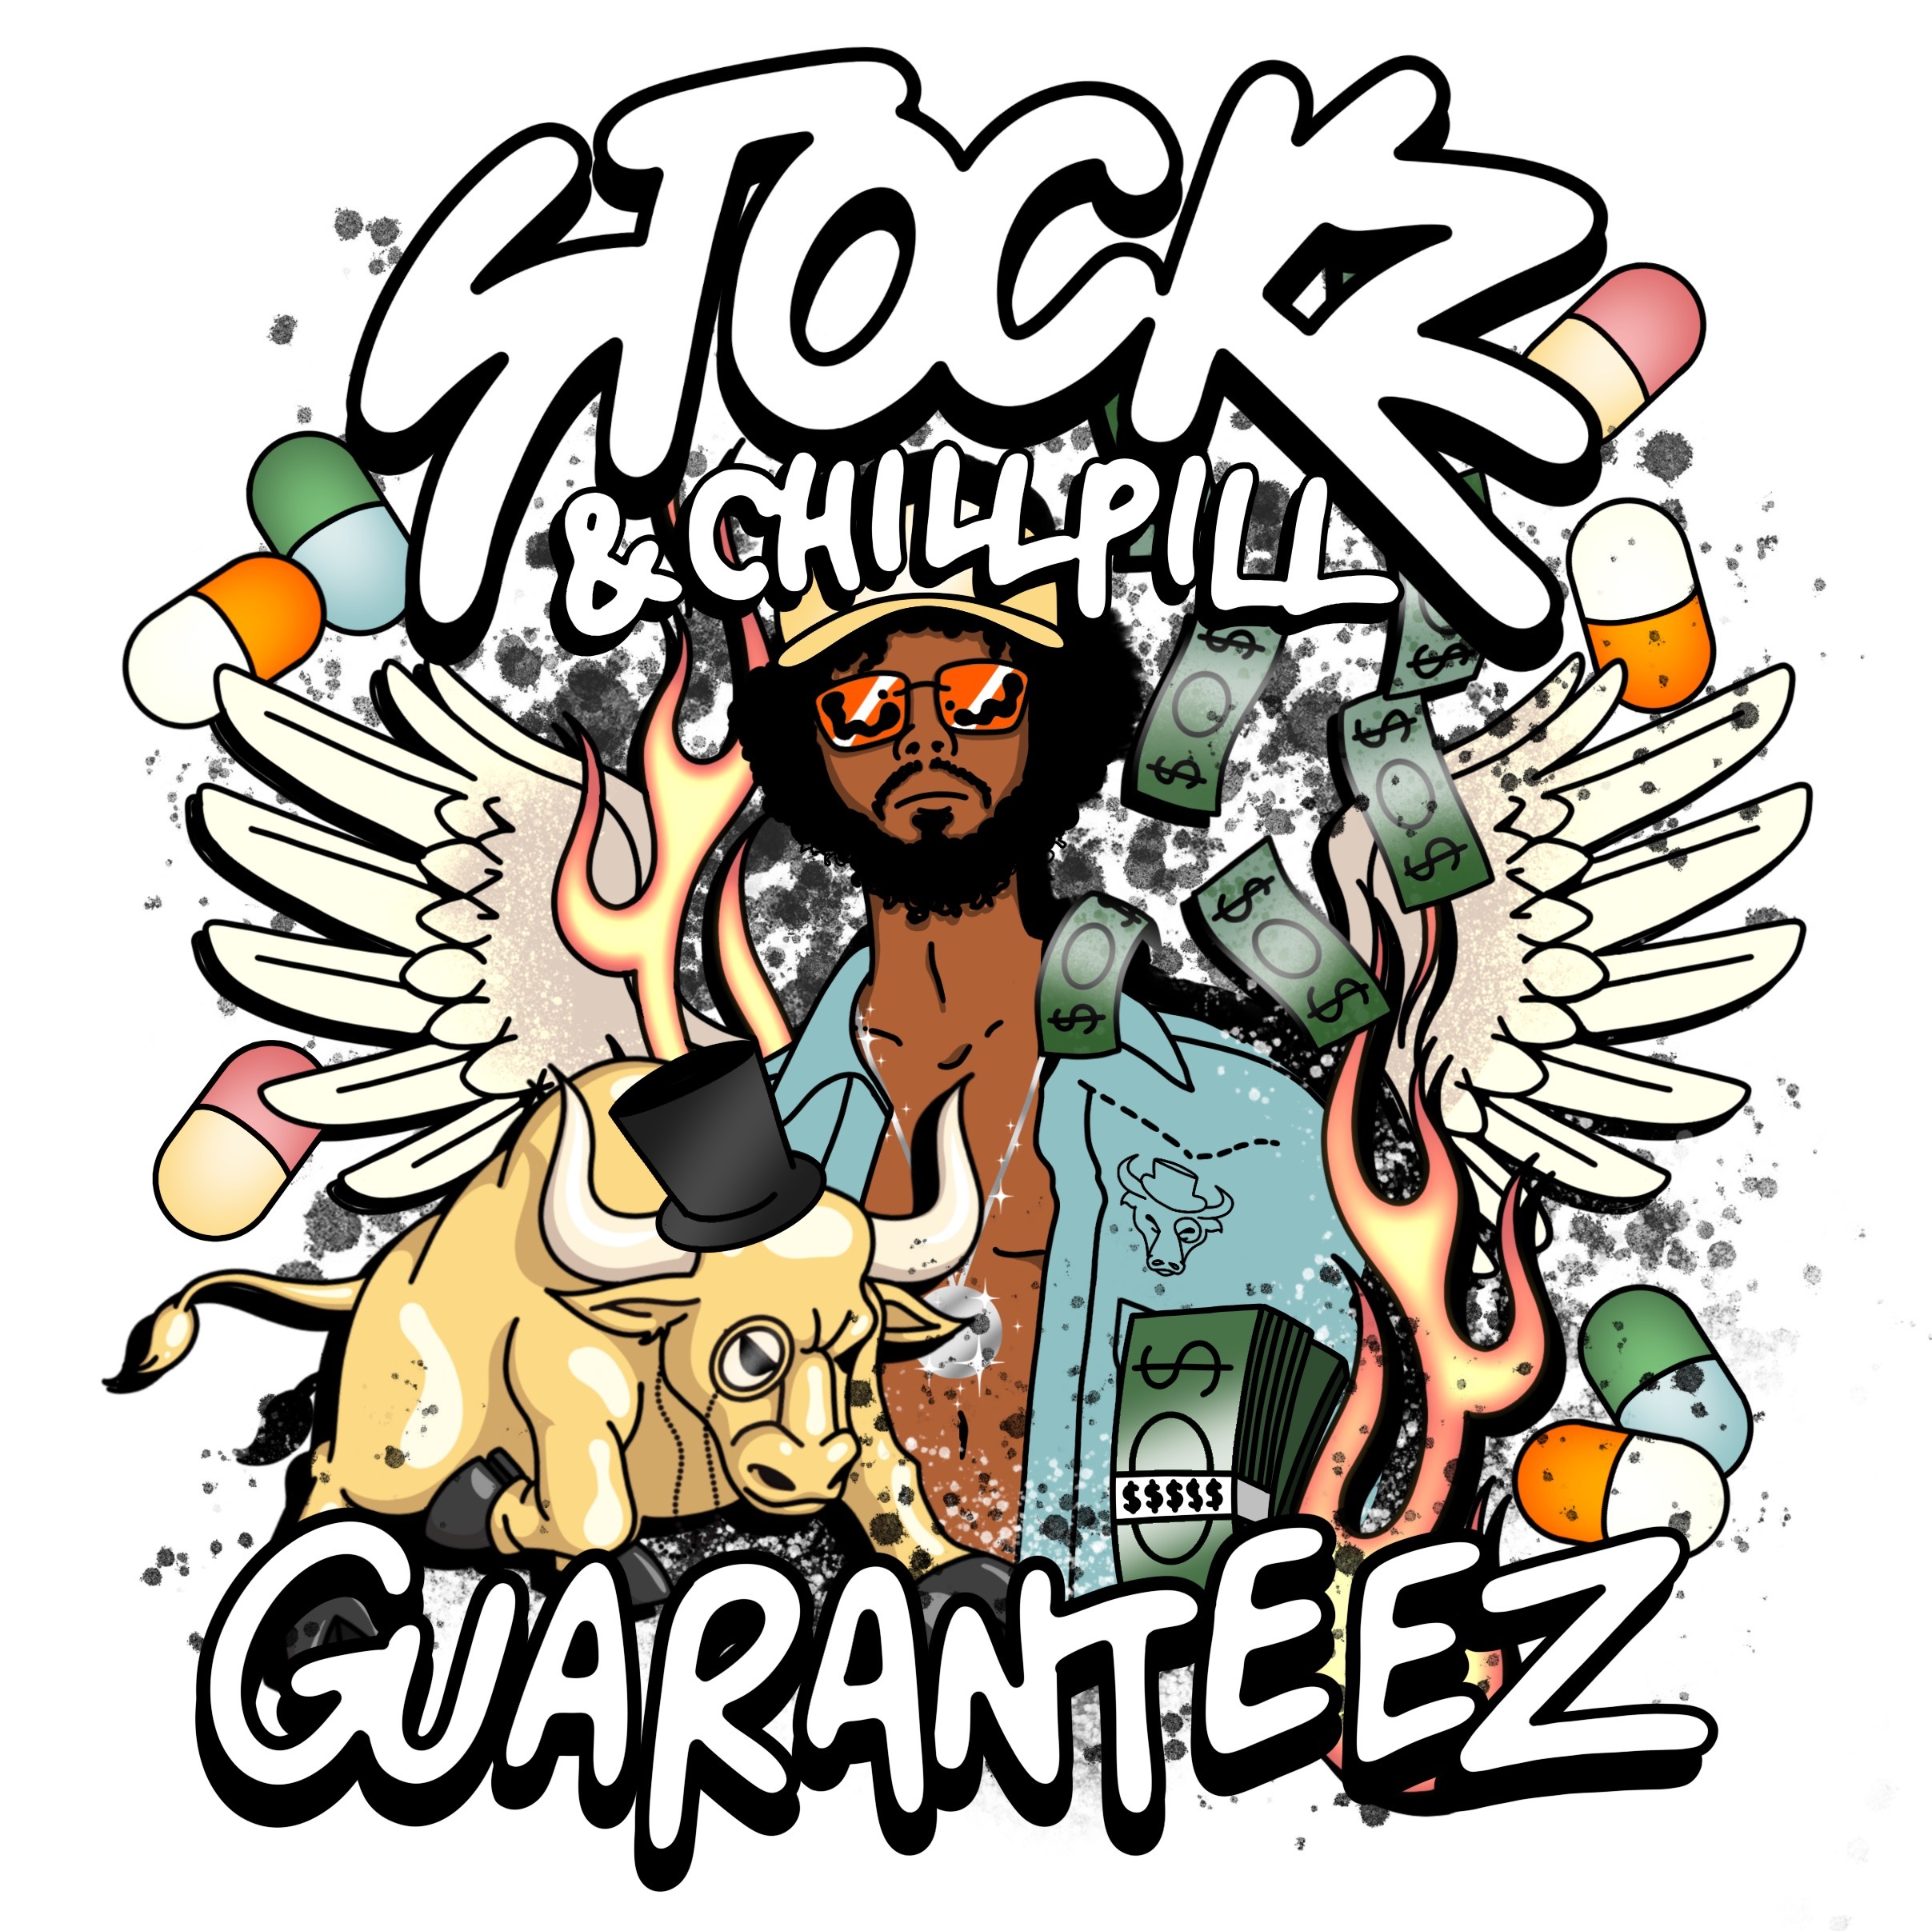 "Guaranteez" by Stockz & chillpill